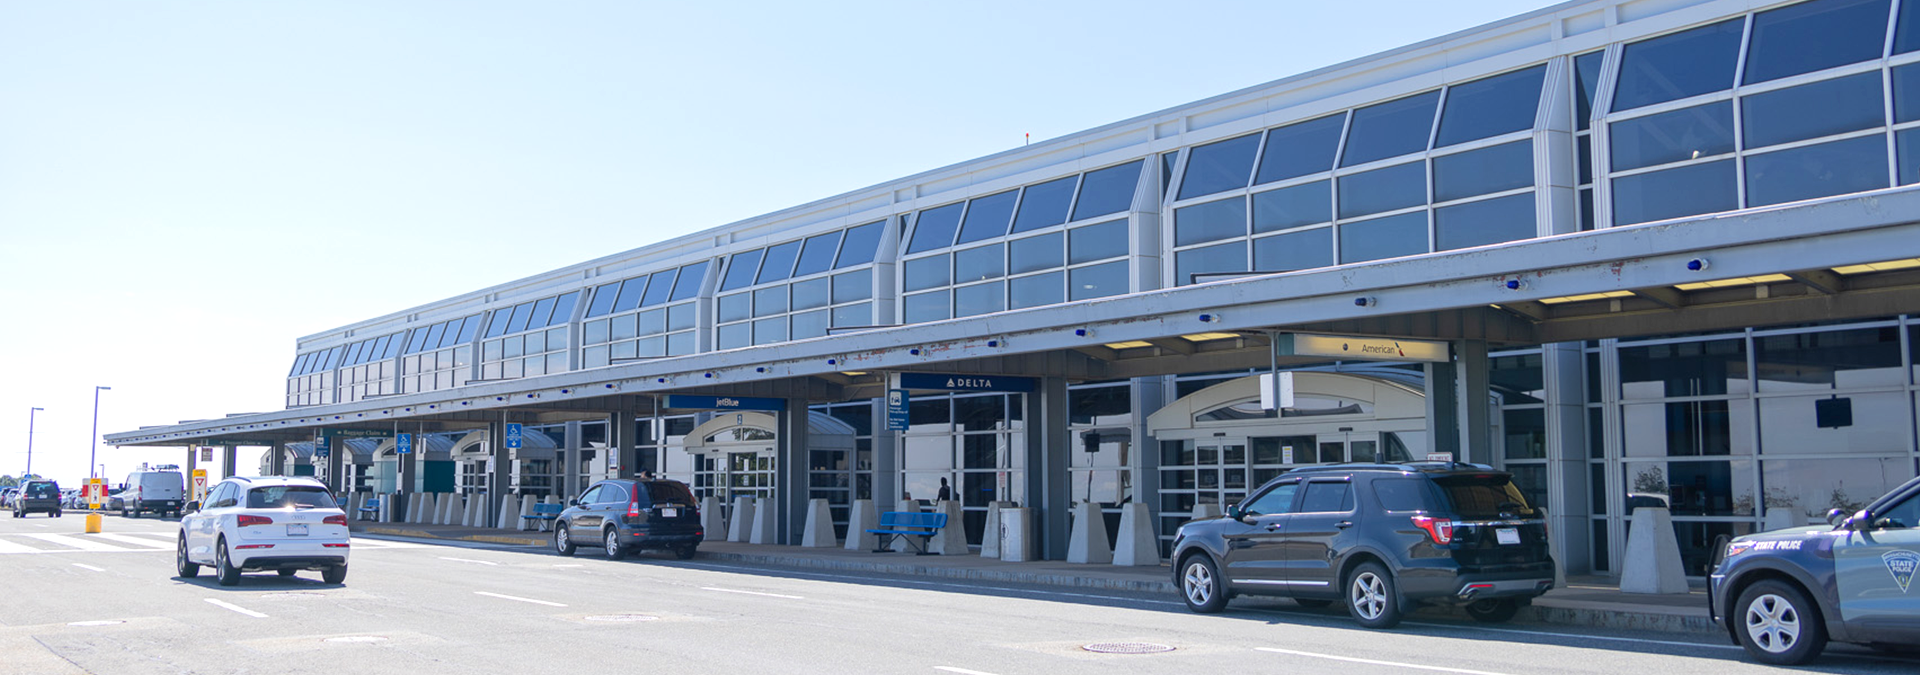 exterior of Worcester Regional Airport